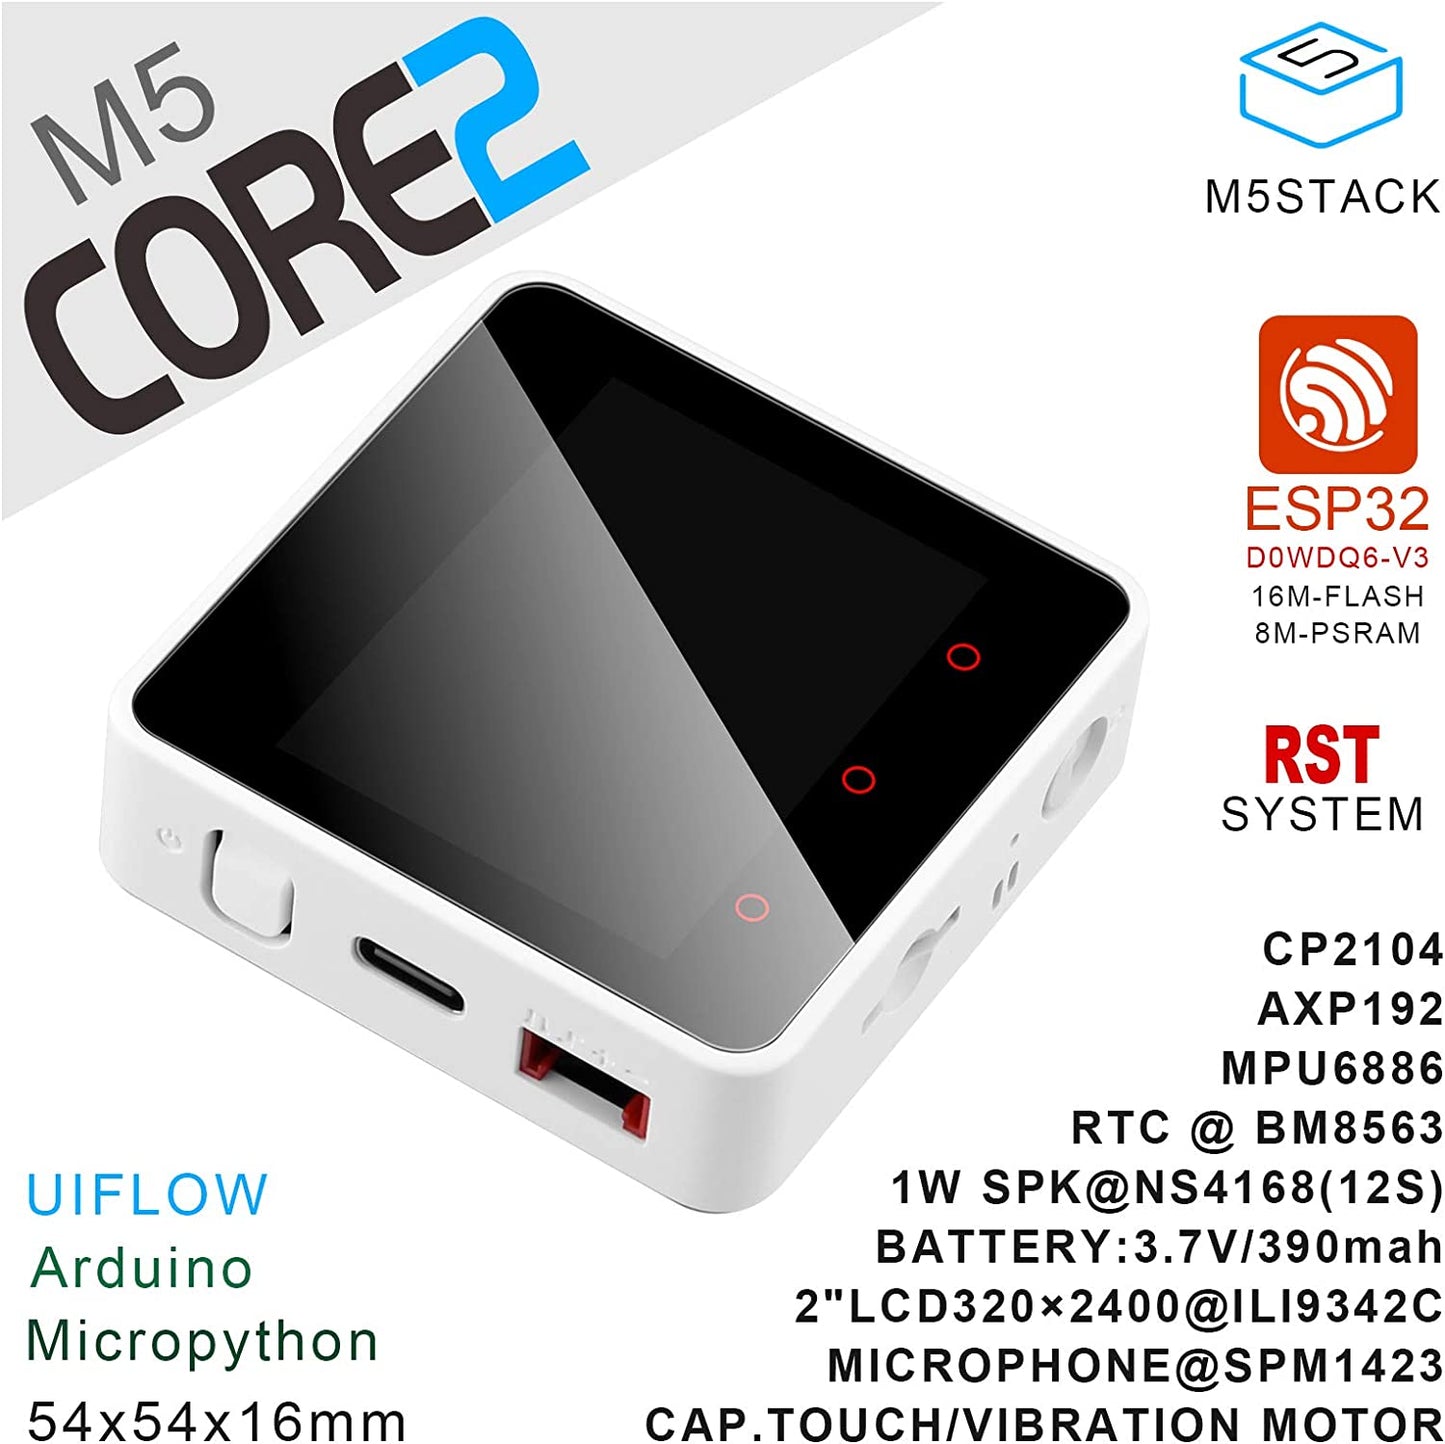 MakerFocus M5Stack Core2 ESP32 Development Kit 2nd Generation Core Device CP2104 MPU 6886 Built-in Bluetooth WiFi with Dual Core 32-bit 240Mhz LX6 Processors 16M Flash 8M PSRAM for UIFlow MicroPython